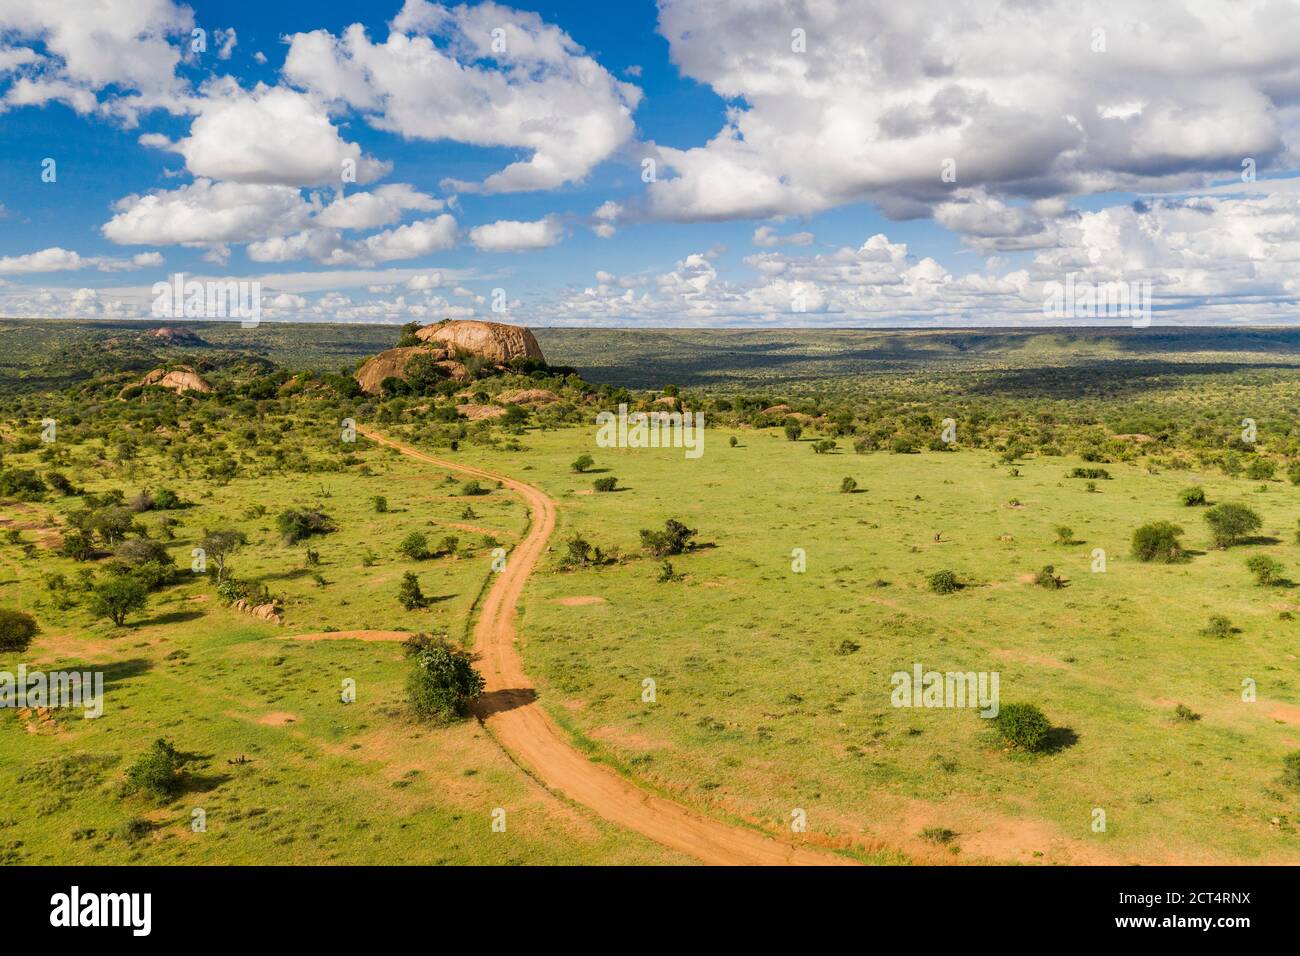 Baboon Rock at Sosian Ranch, Laikipia County, Kenya drone Stock Photo